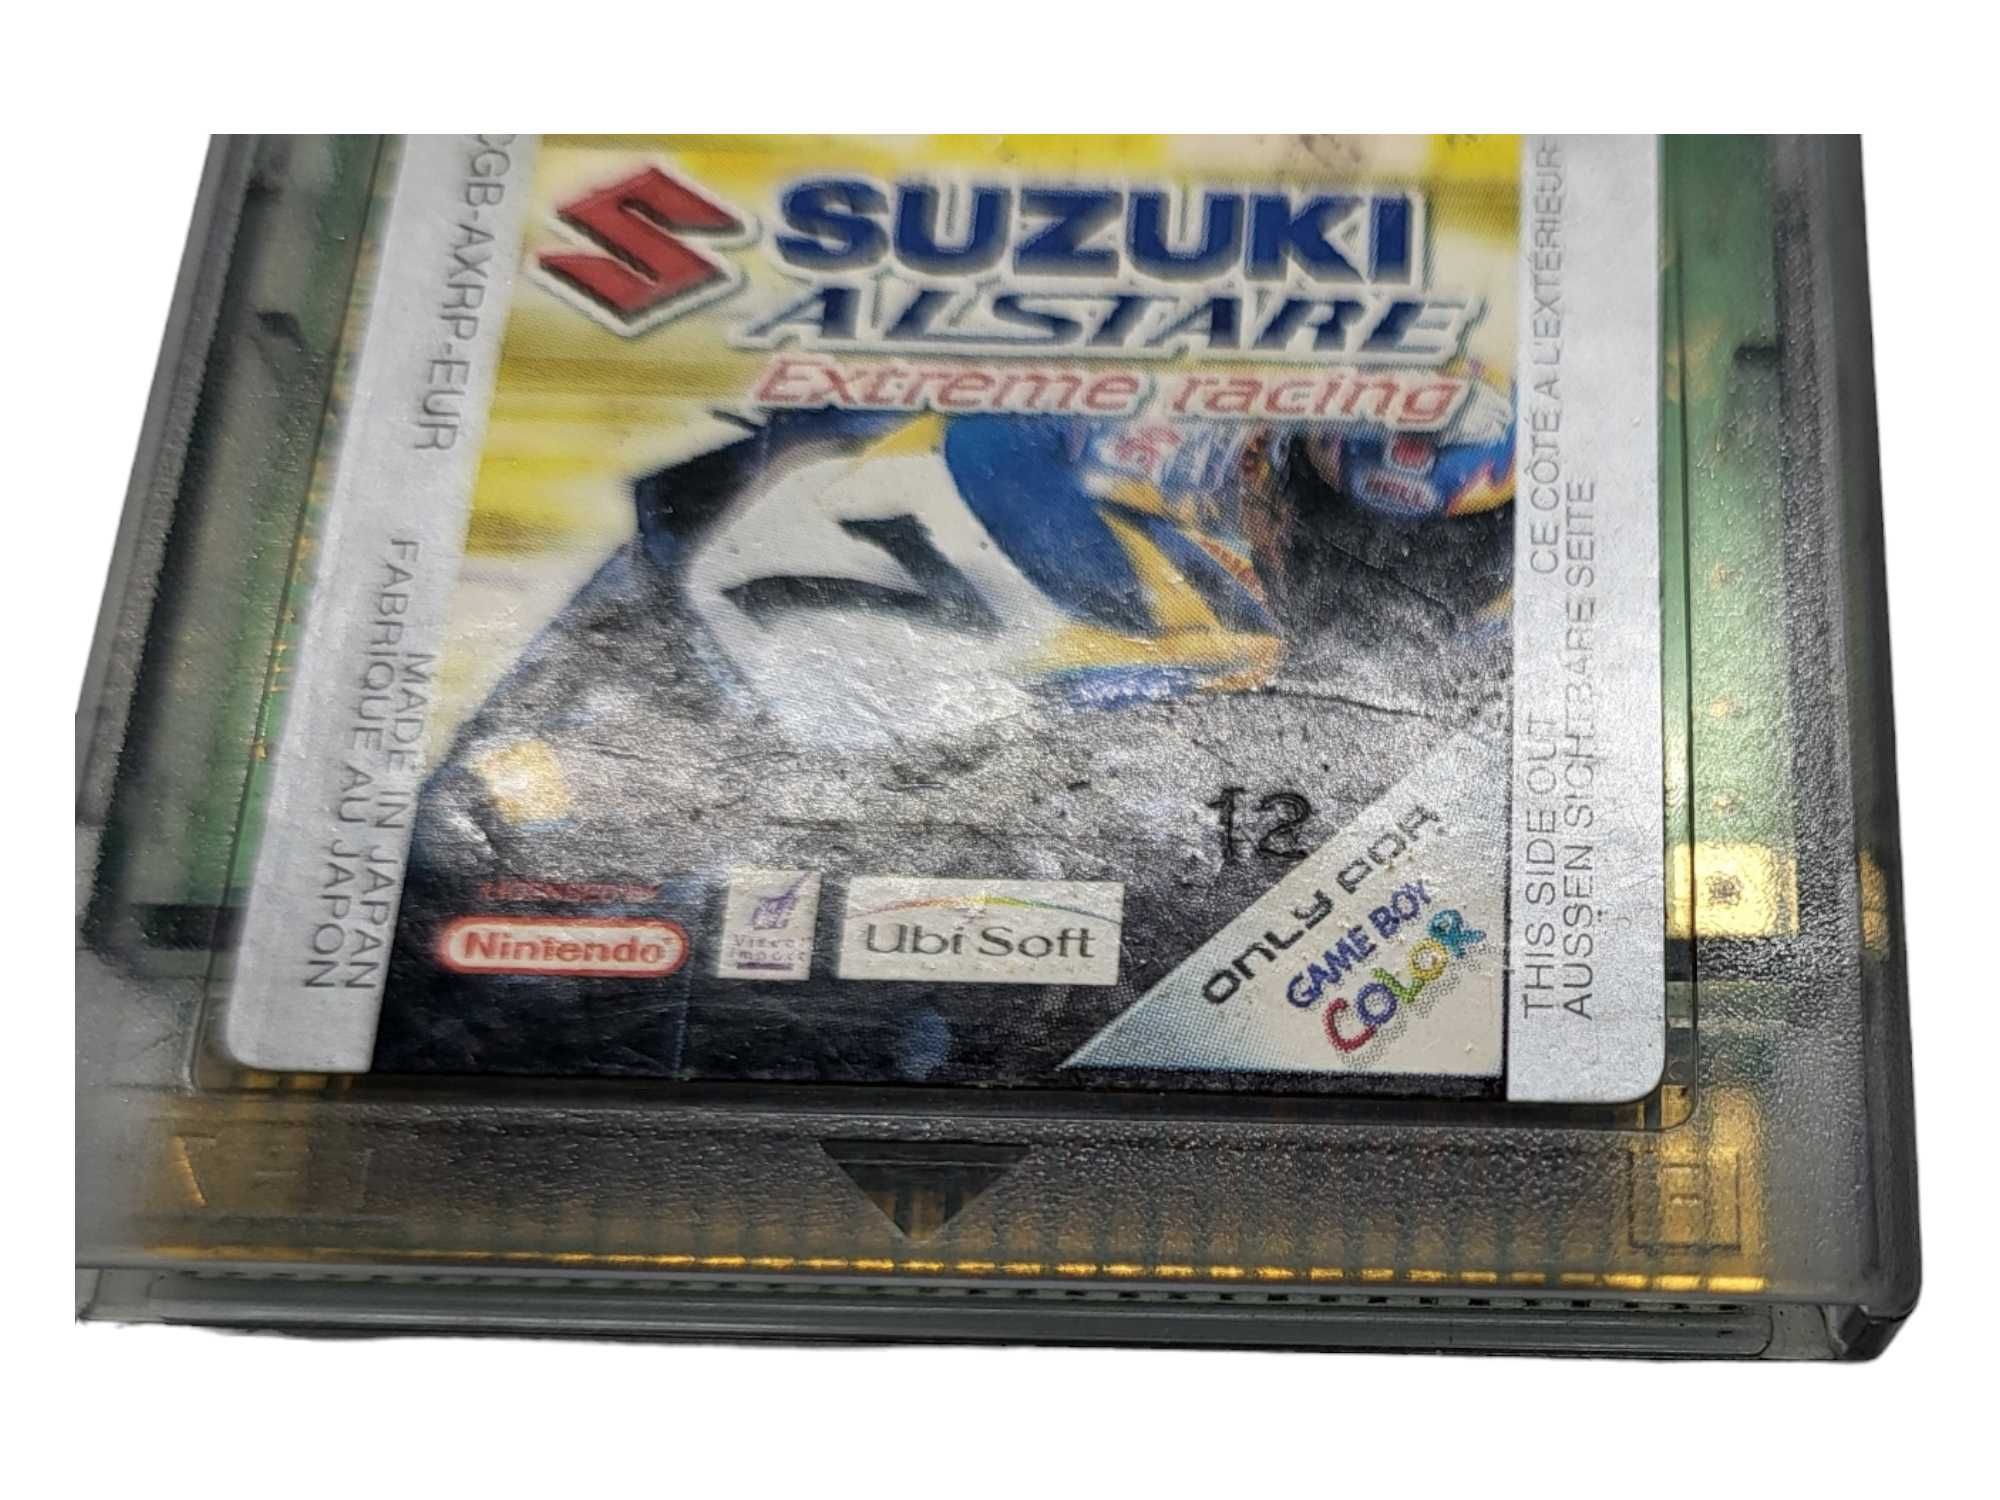 Suzuki Alstare Extreme Racing Game Boy Gameboy Color